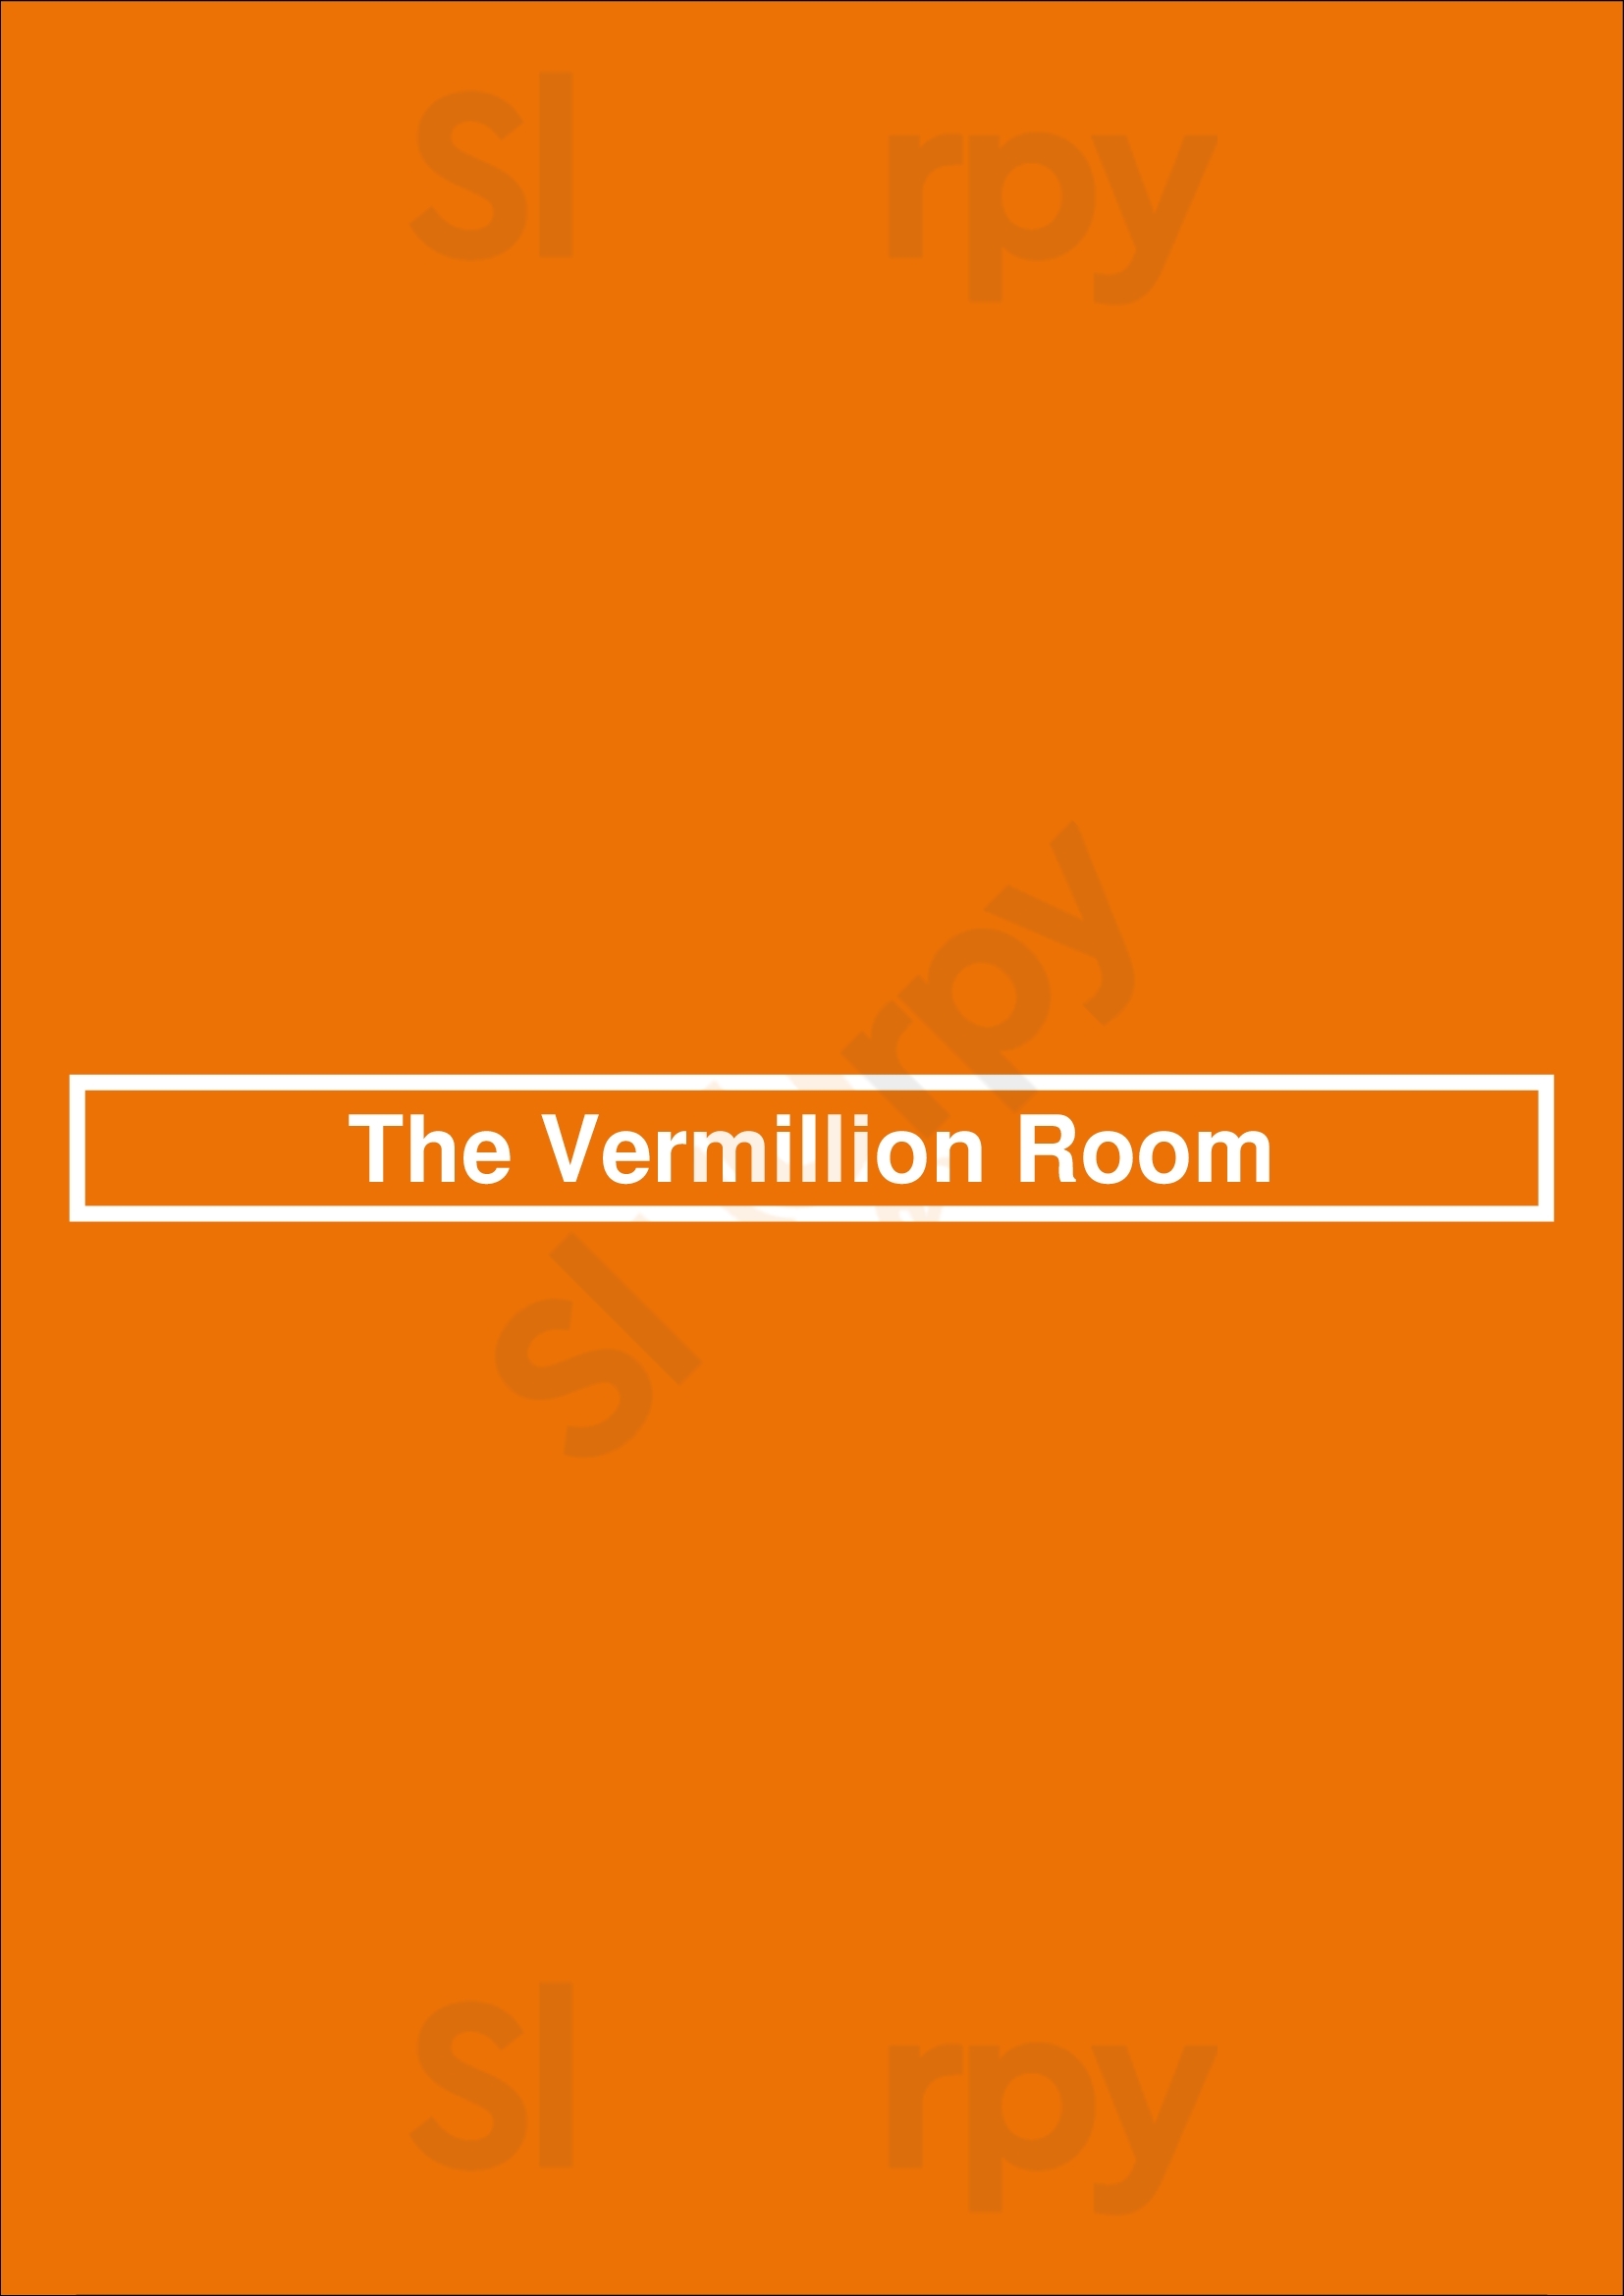 The Vermillion Room Banff Menu - 1